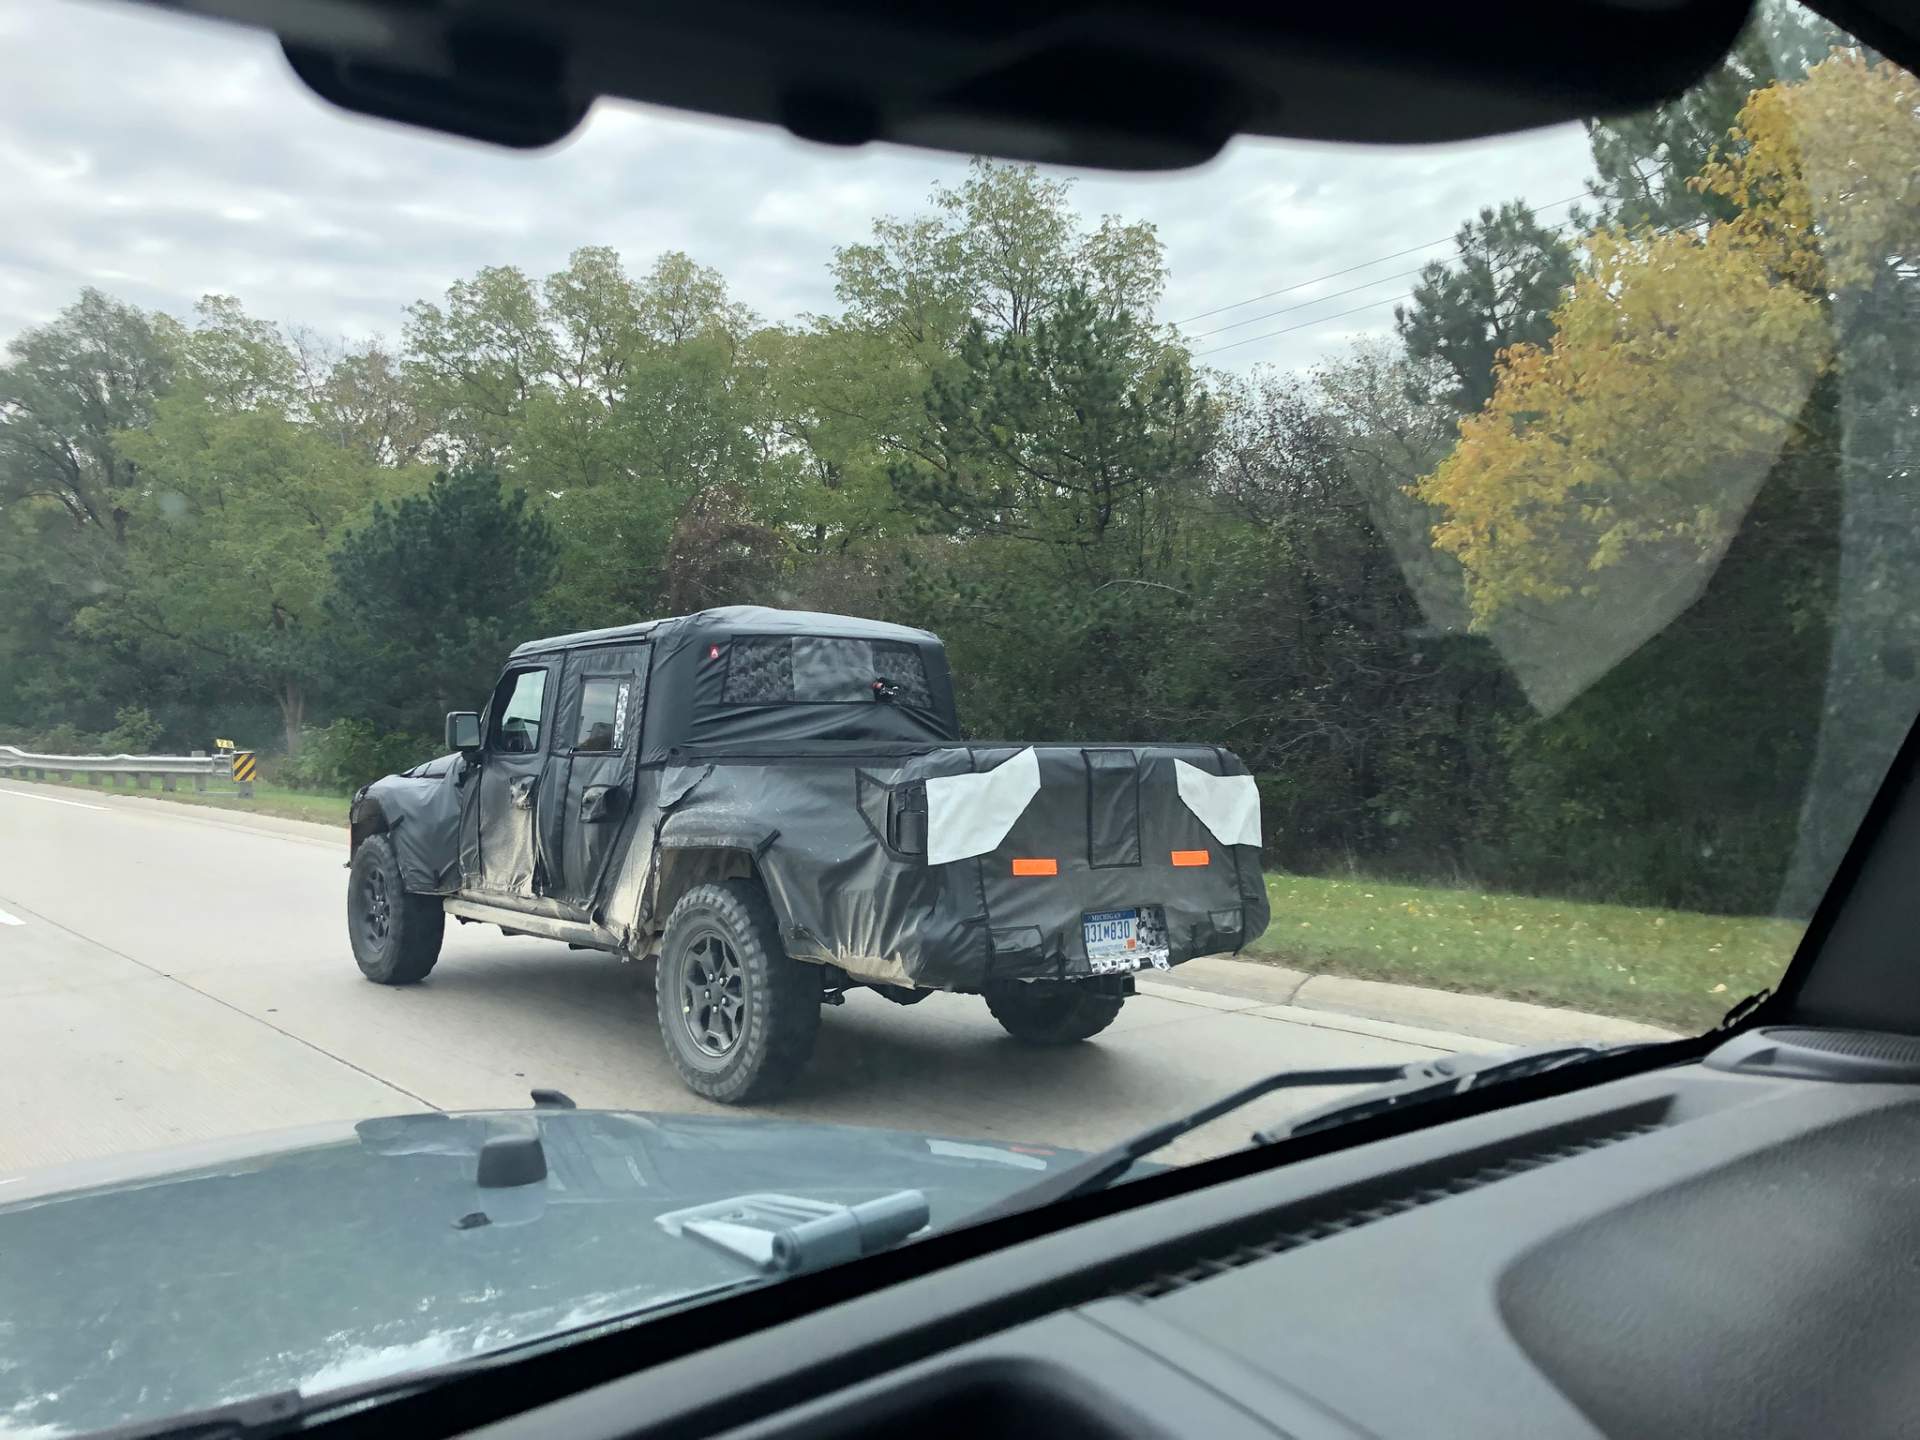 Jeep pickup?